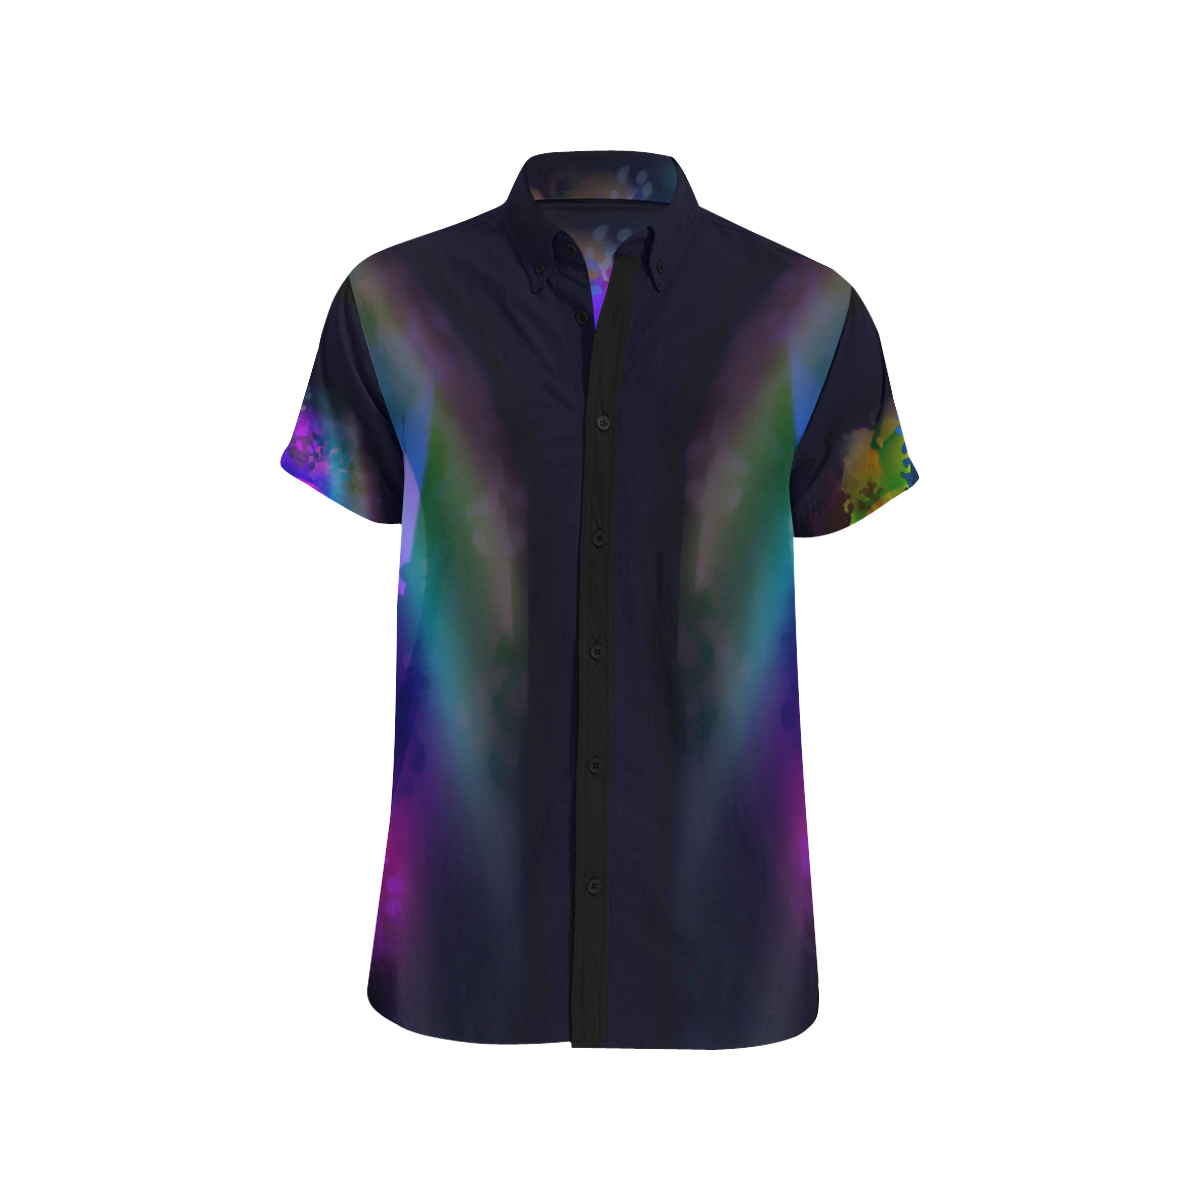 Pride 2019 by Nico Bielow Men's All Over Print Short Sleeve Shirt (Model T53)